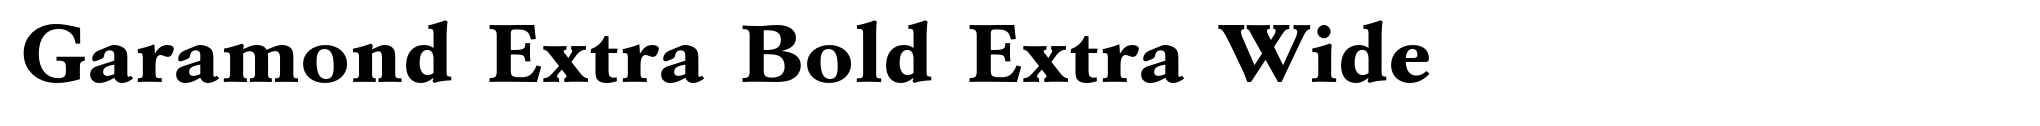 Garamond Extra Bold Extra Wide image